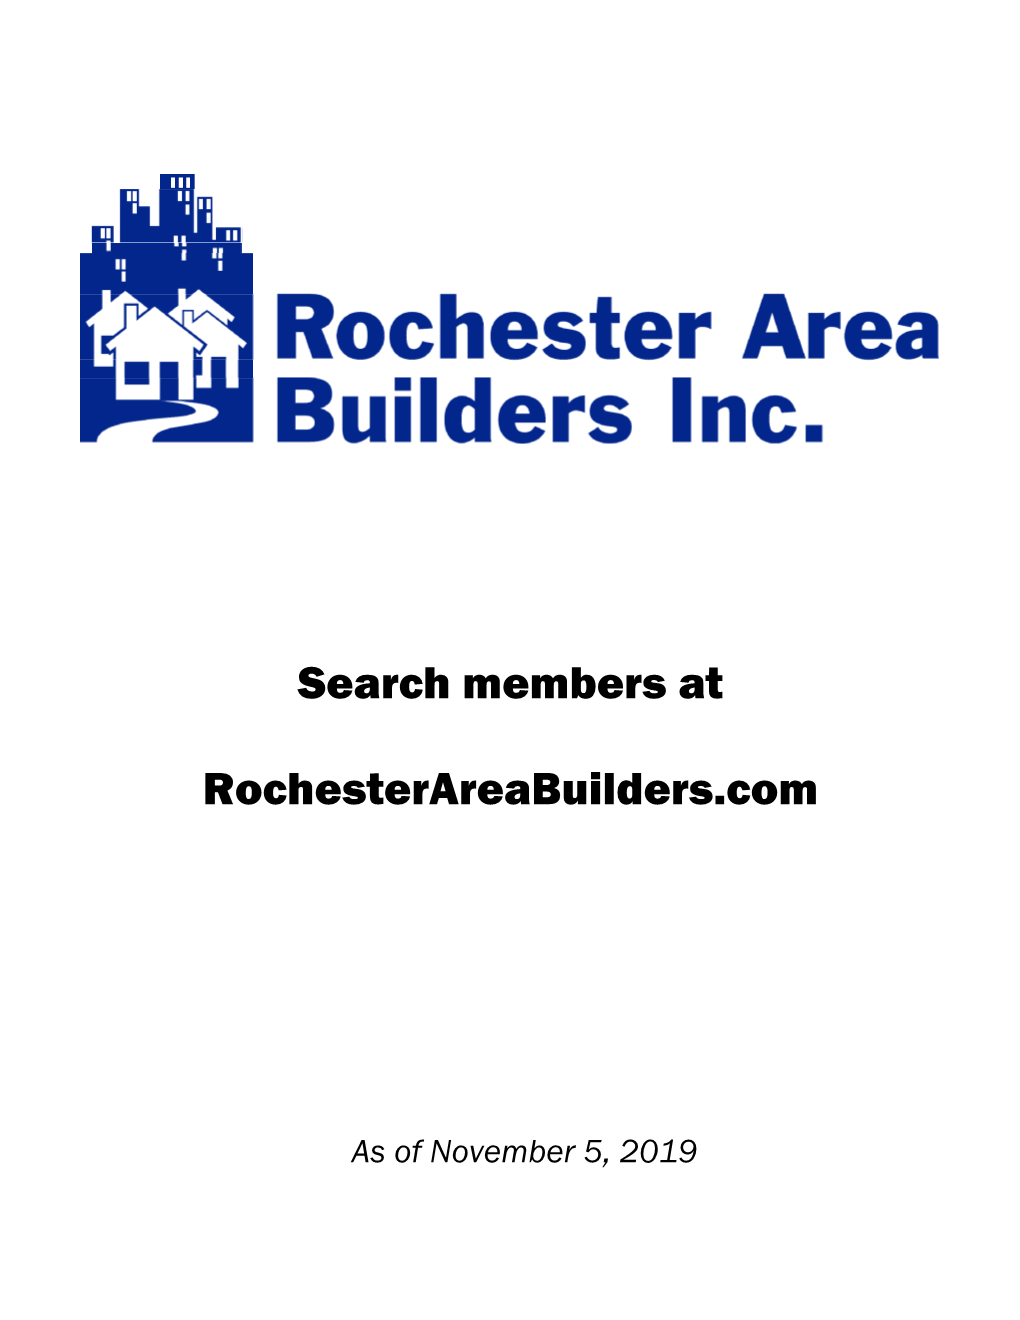 Search Members at Rochesterareabuilders.Com